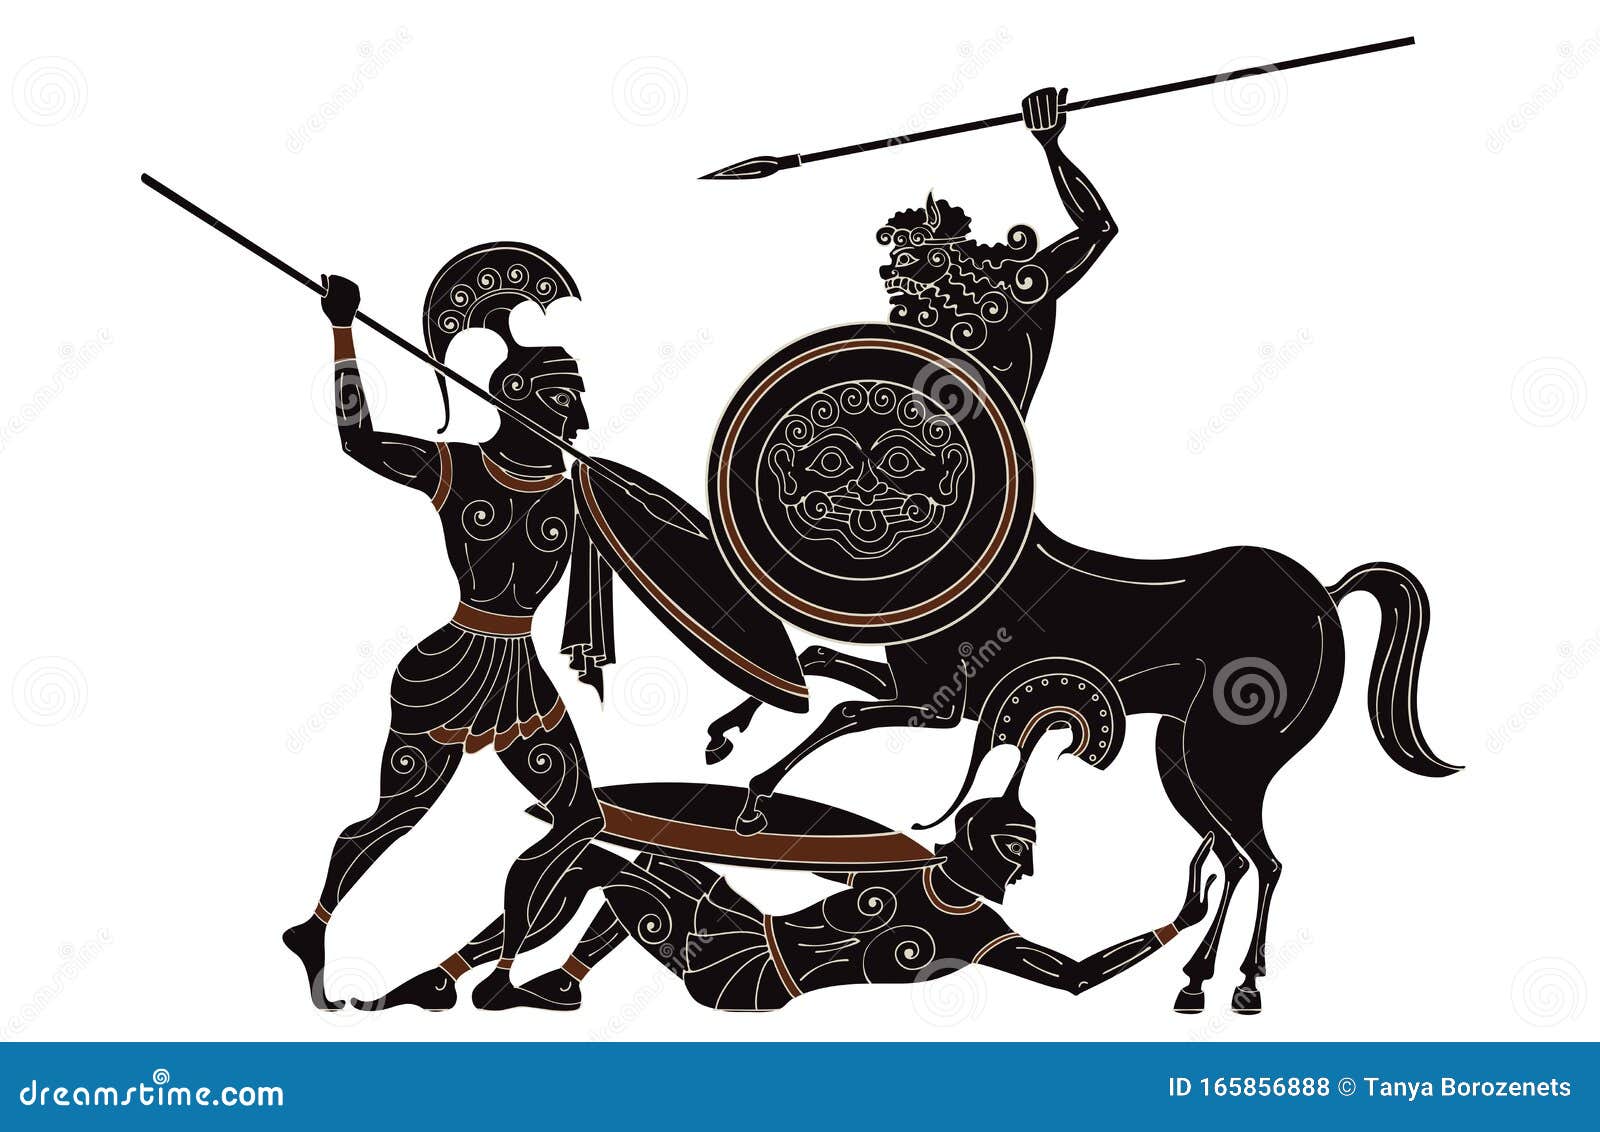 centaur,hero,spartan,myth.ancient civilization culture